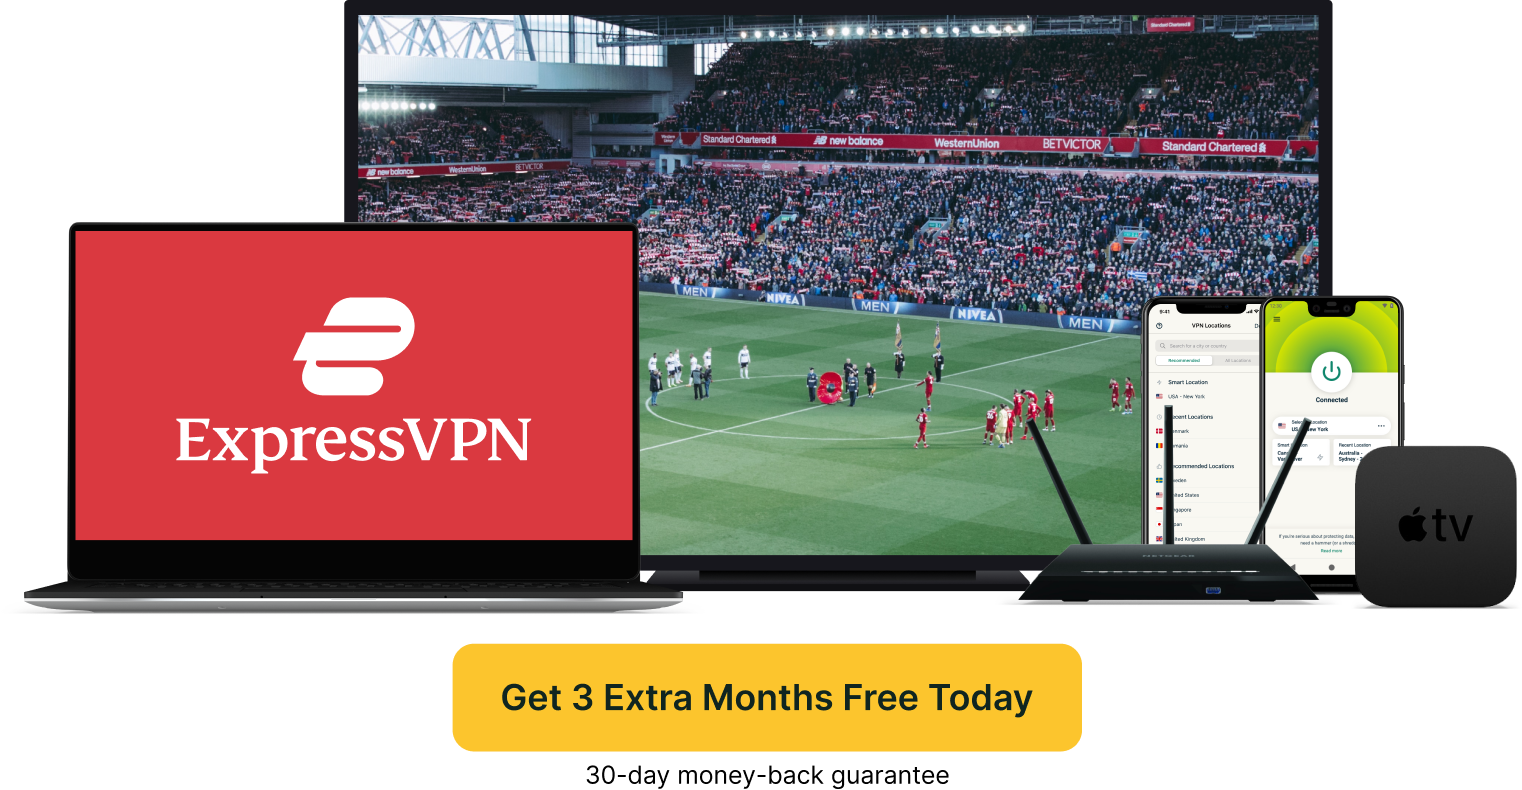 Express VPN 3 months free